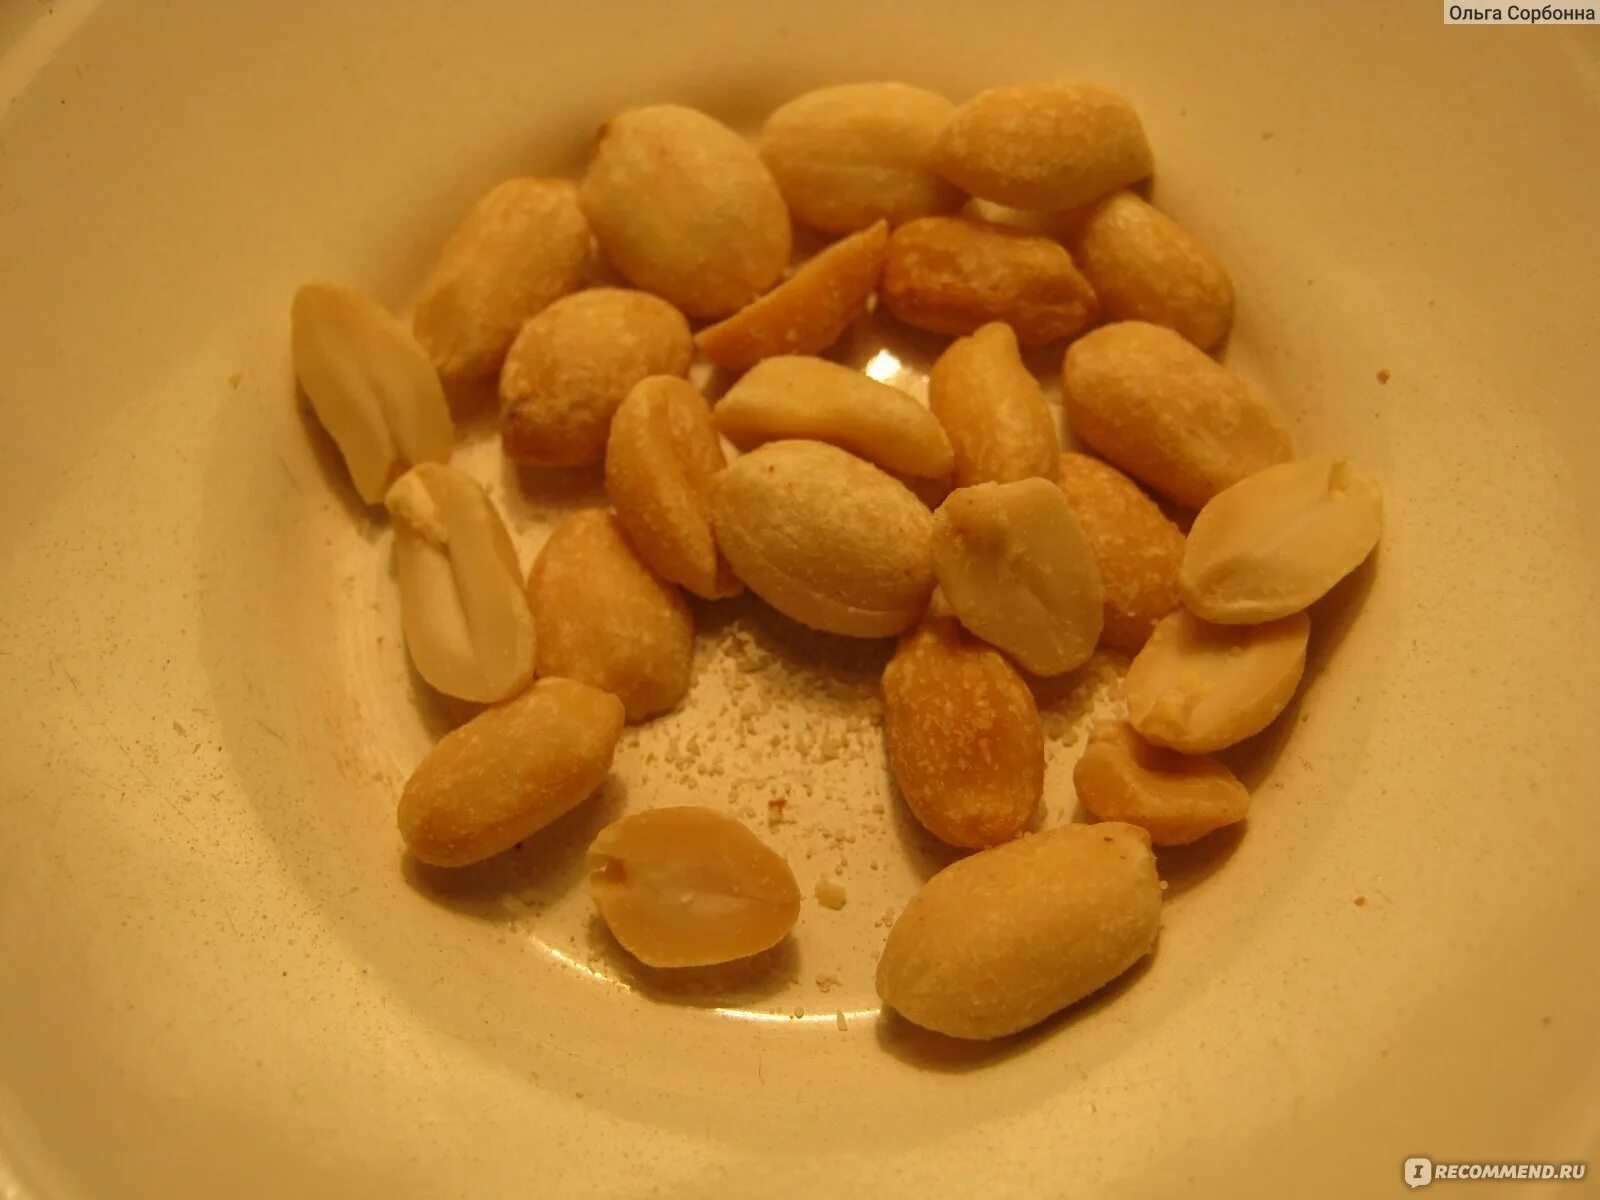 Может ли арахис. Арахис гидролизованный. Арахис несоленый. Арахис нежареный. Аллергия на арахис соленый.